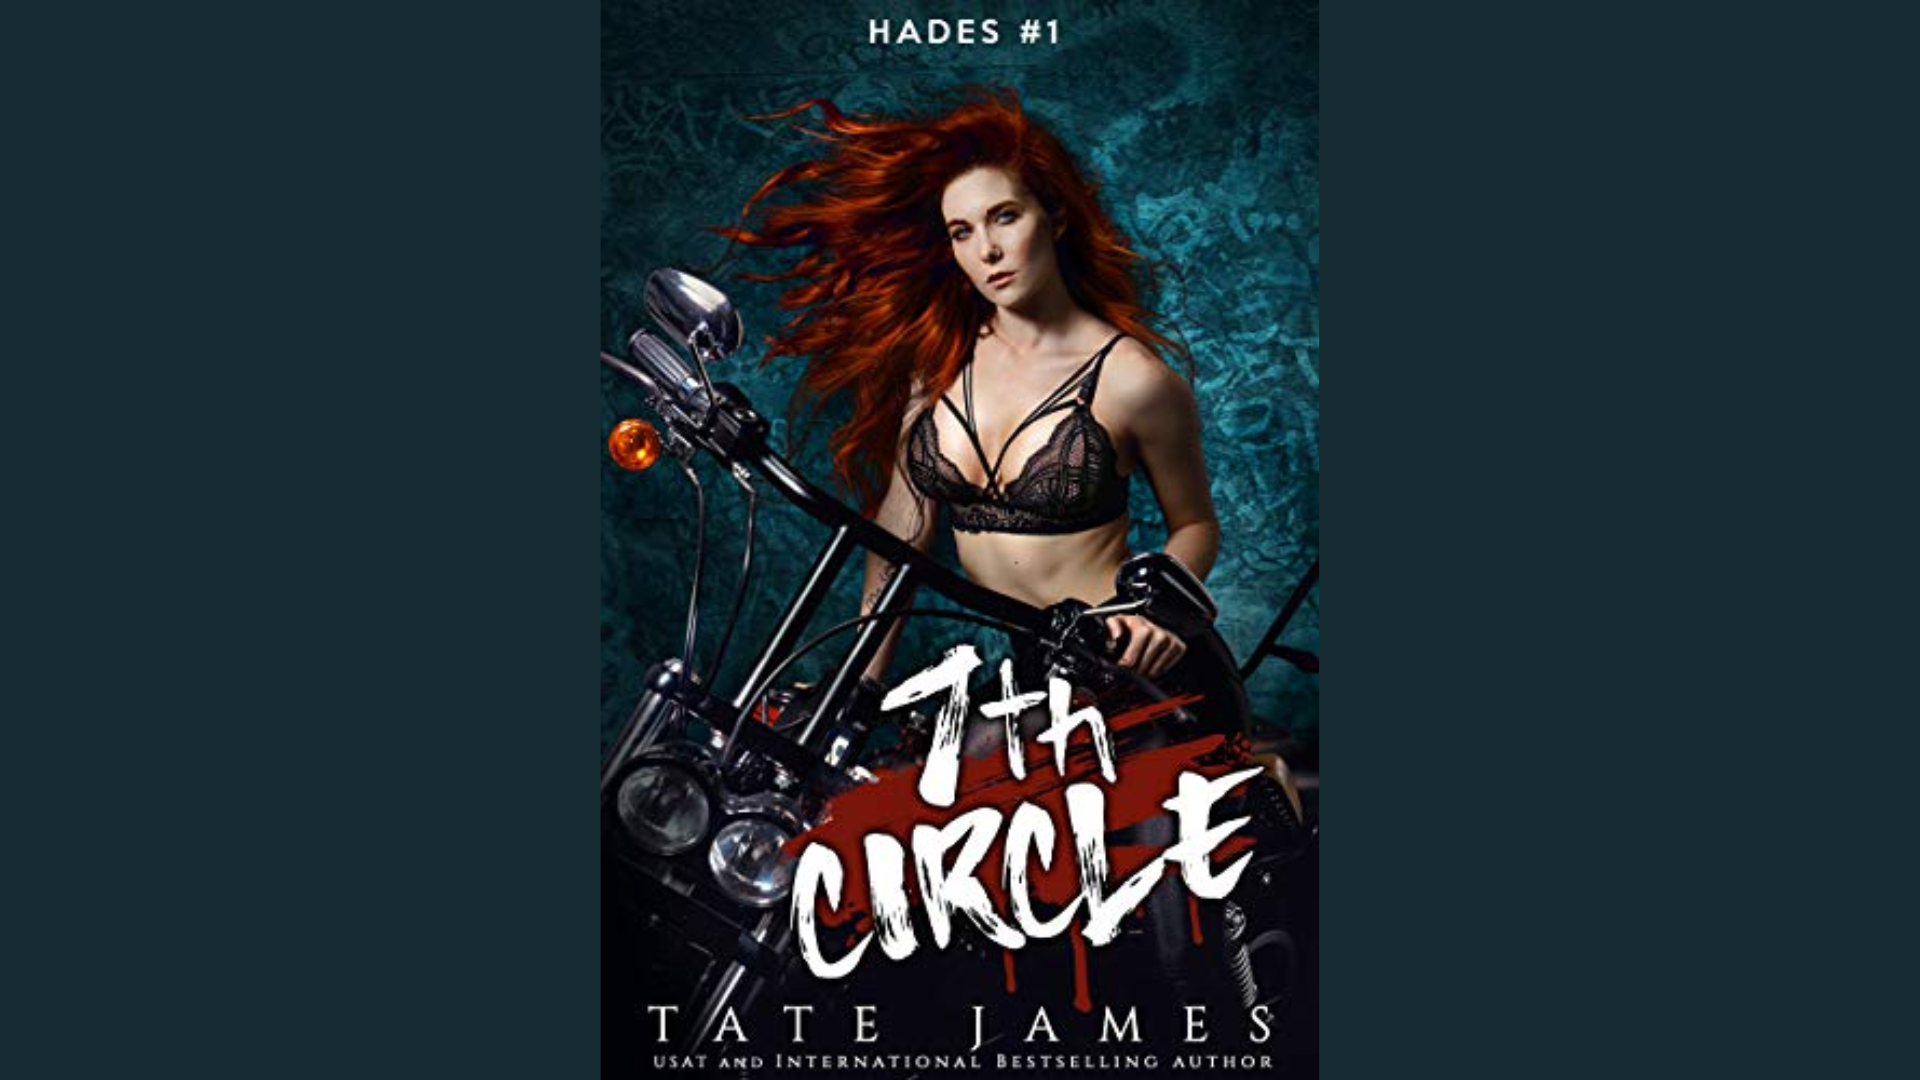 TBR Spotlight: “7th Circle” by Tate James